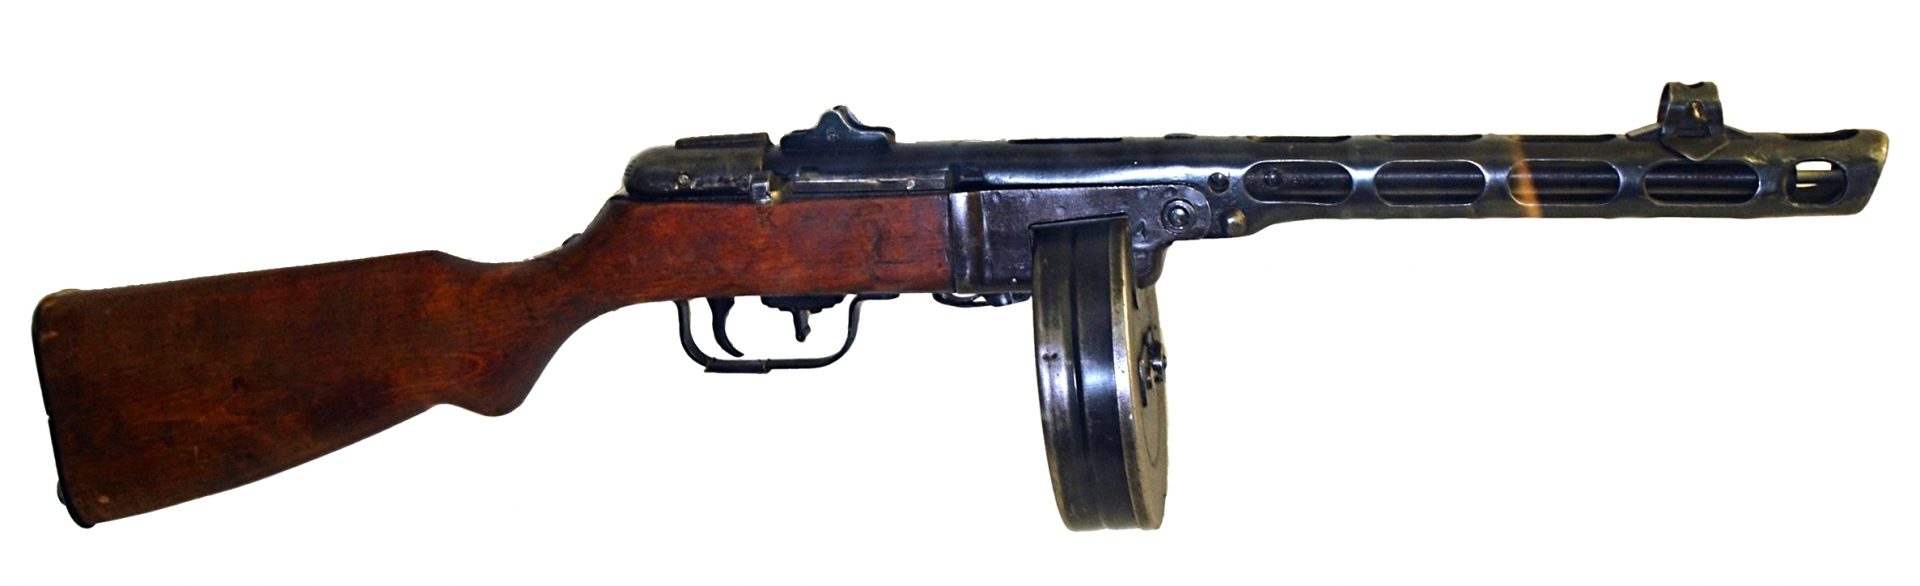 Пистолет-пулемет_системы_Шпагина_обр__1941